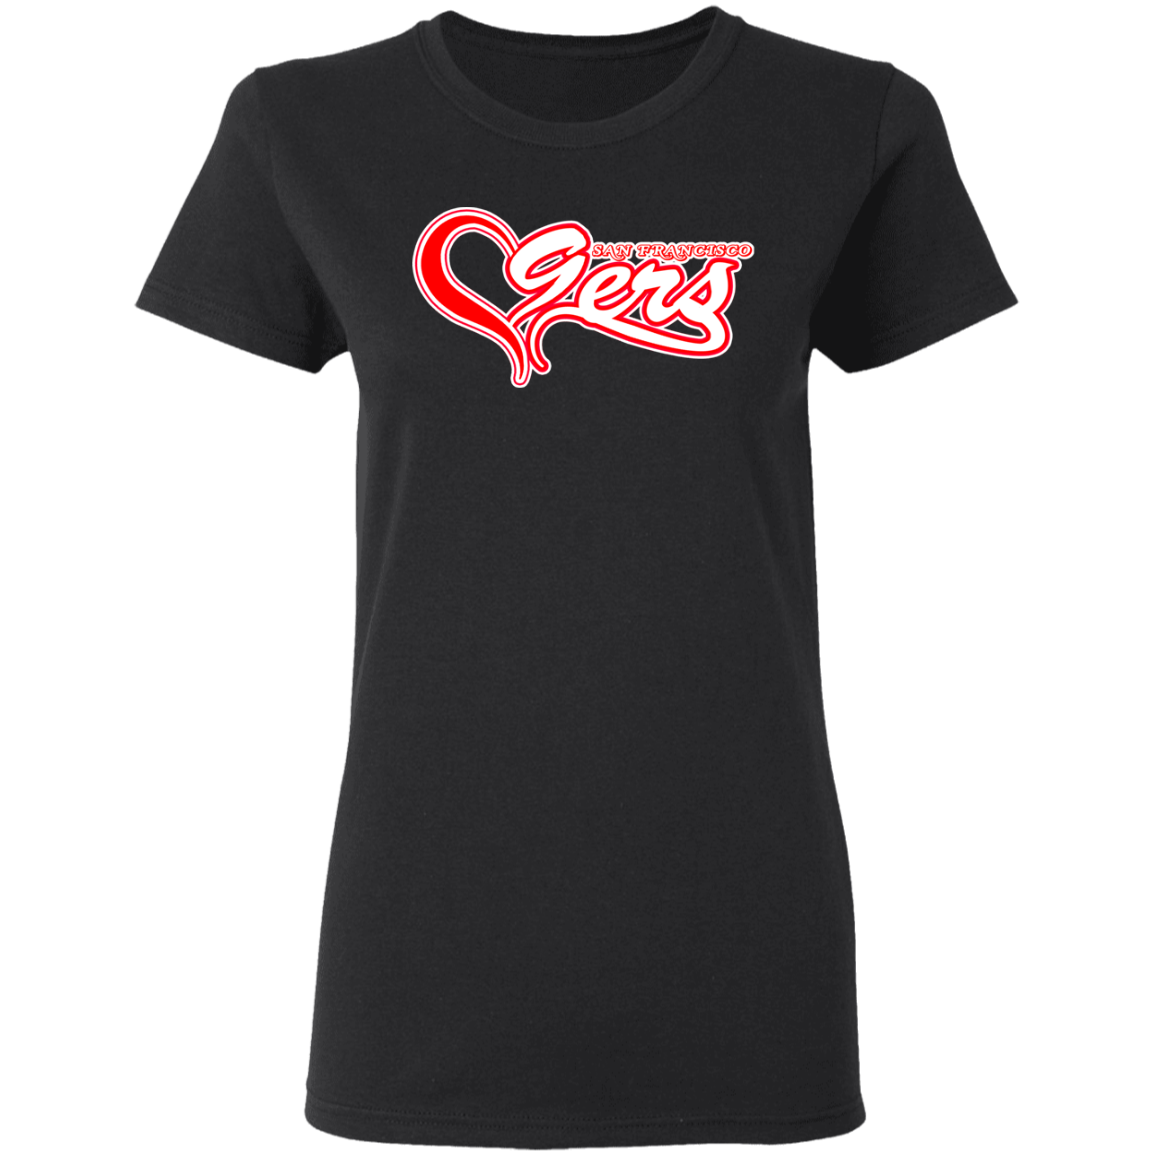 ArtichokeUSA Custom Design #50. 9ers Love. SF 49ers Fan Art. Let's Make Your Own Custom Team Shirt. Ladies' Basic 100% Cotton T-Shirt